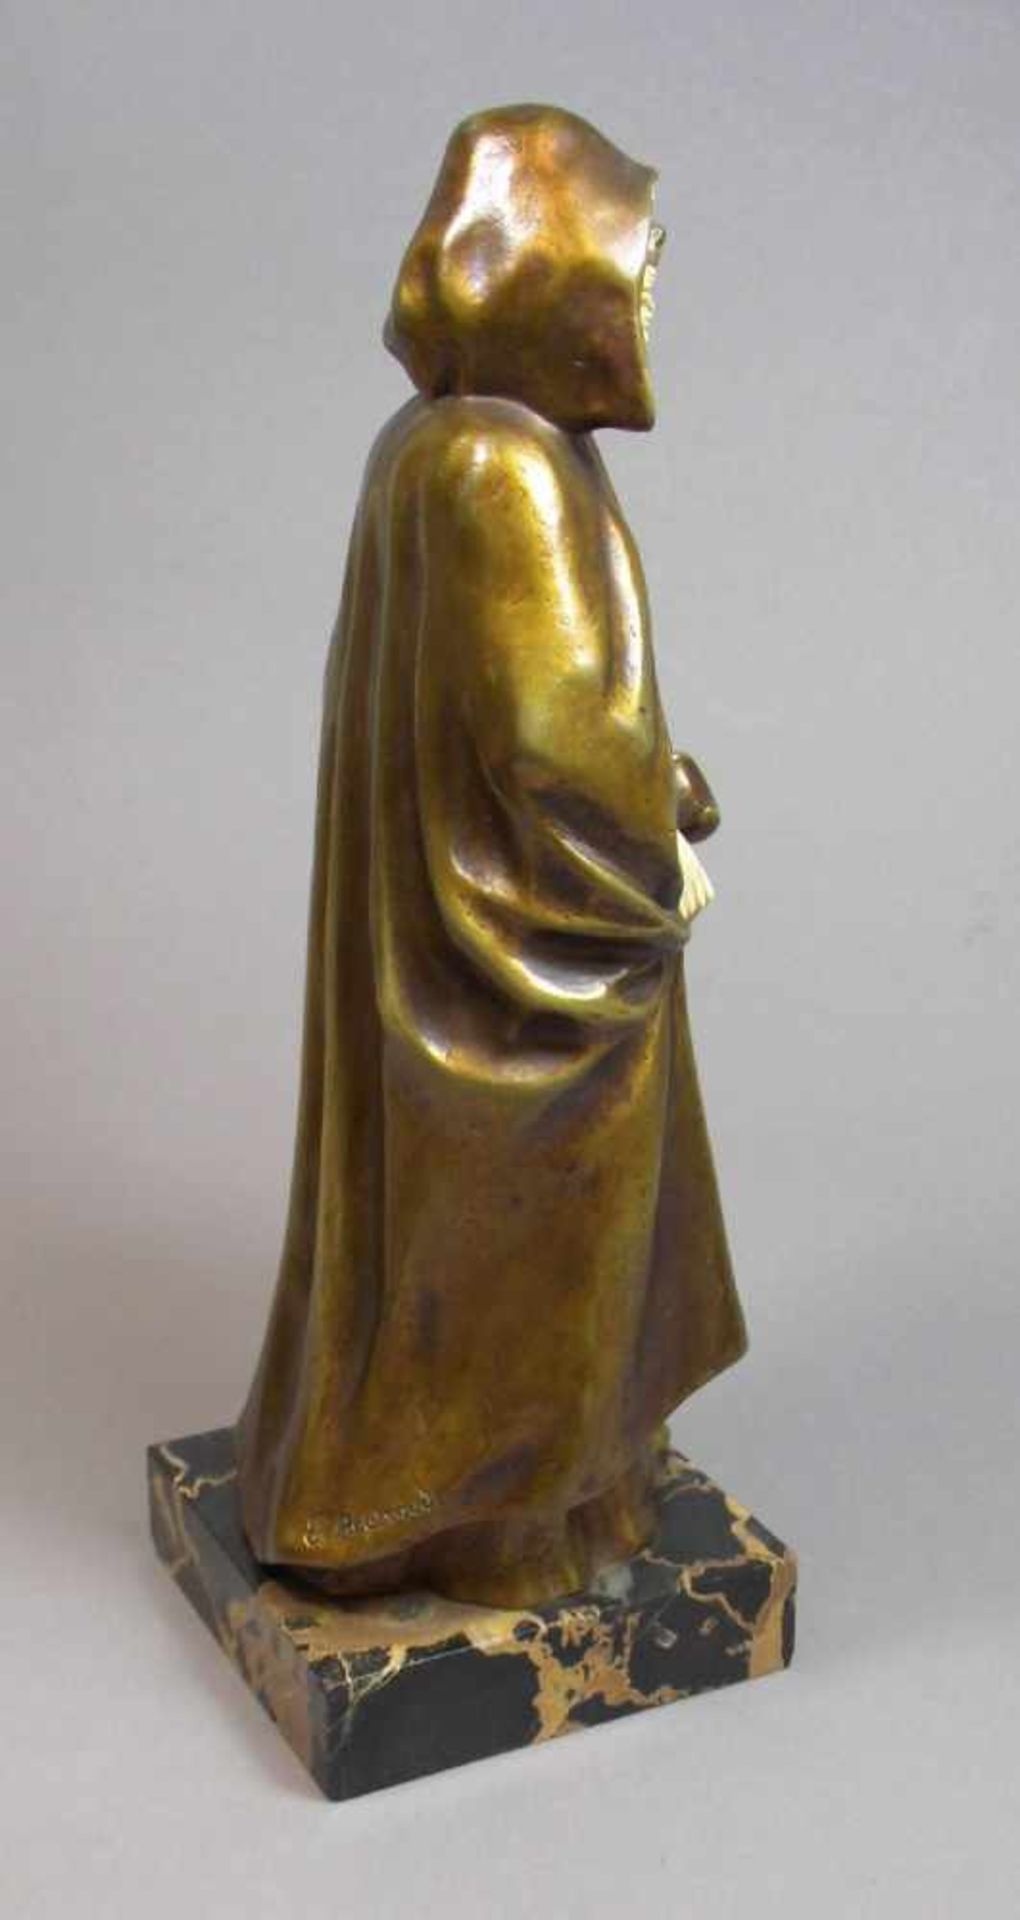 BERNOUD, EUGÈNE (französischer Bildhauer des 19./20. Jh.), Skulptur: "La marche silencieuse", Bronze - Image 5 of 7